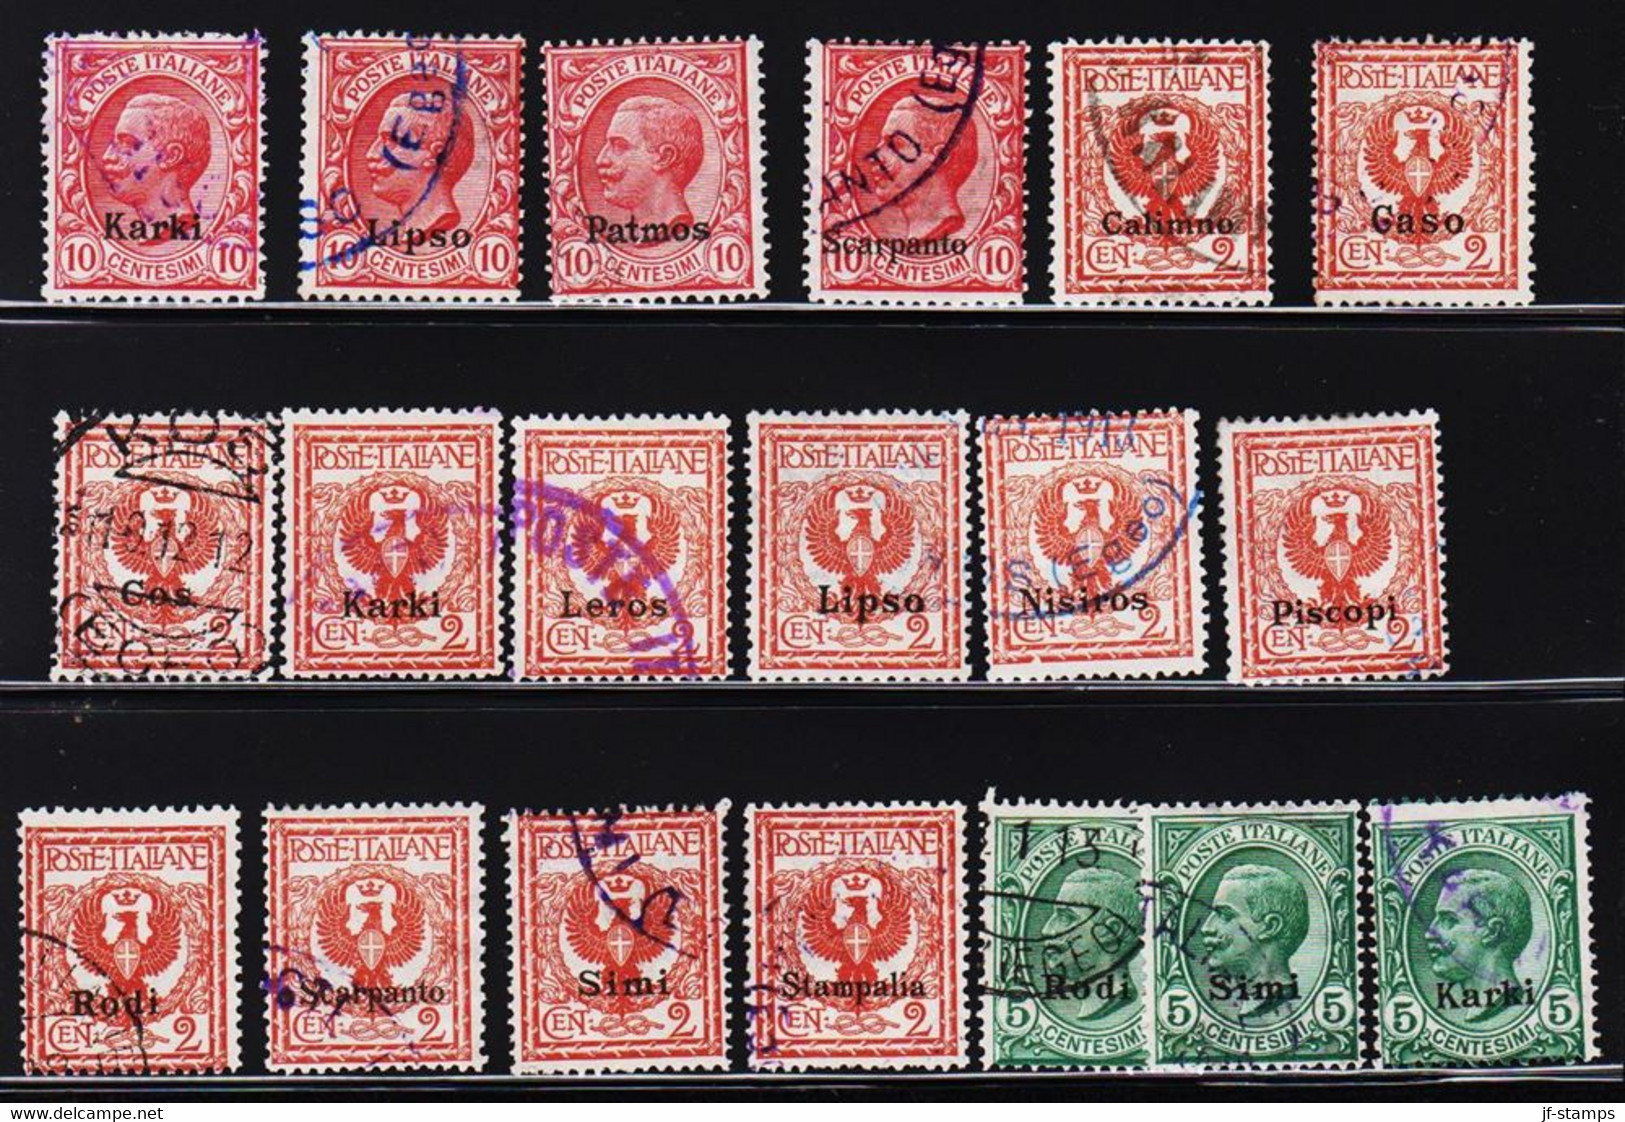 1912. 19 Stamps With Overprint Karki, Lipso, Patmos, Scarpanto, Calimno, Caso, Cos, Leros, Nisiros, Piscop... - JF193021 - Aegean